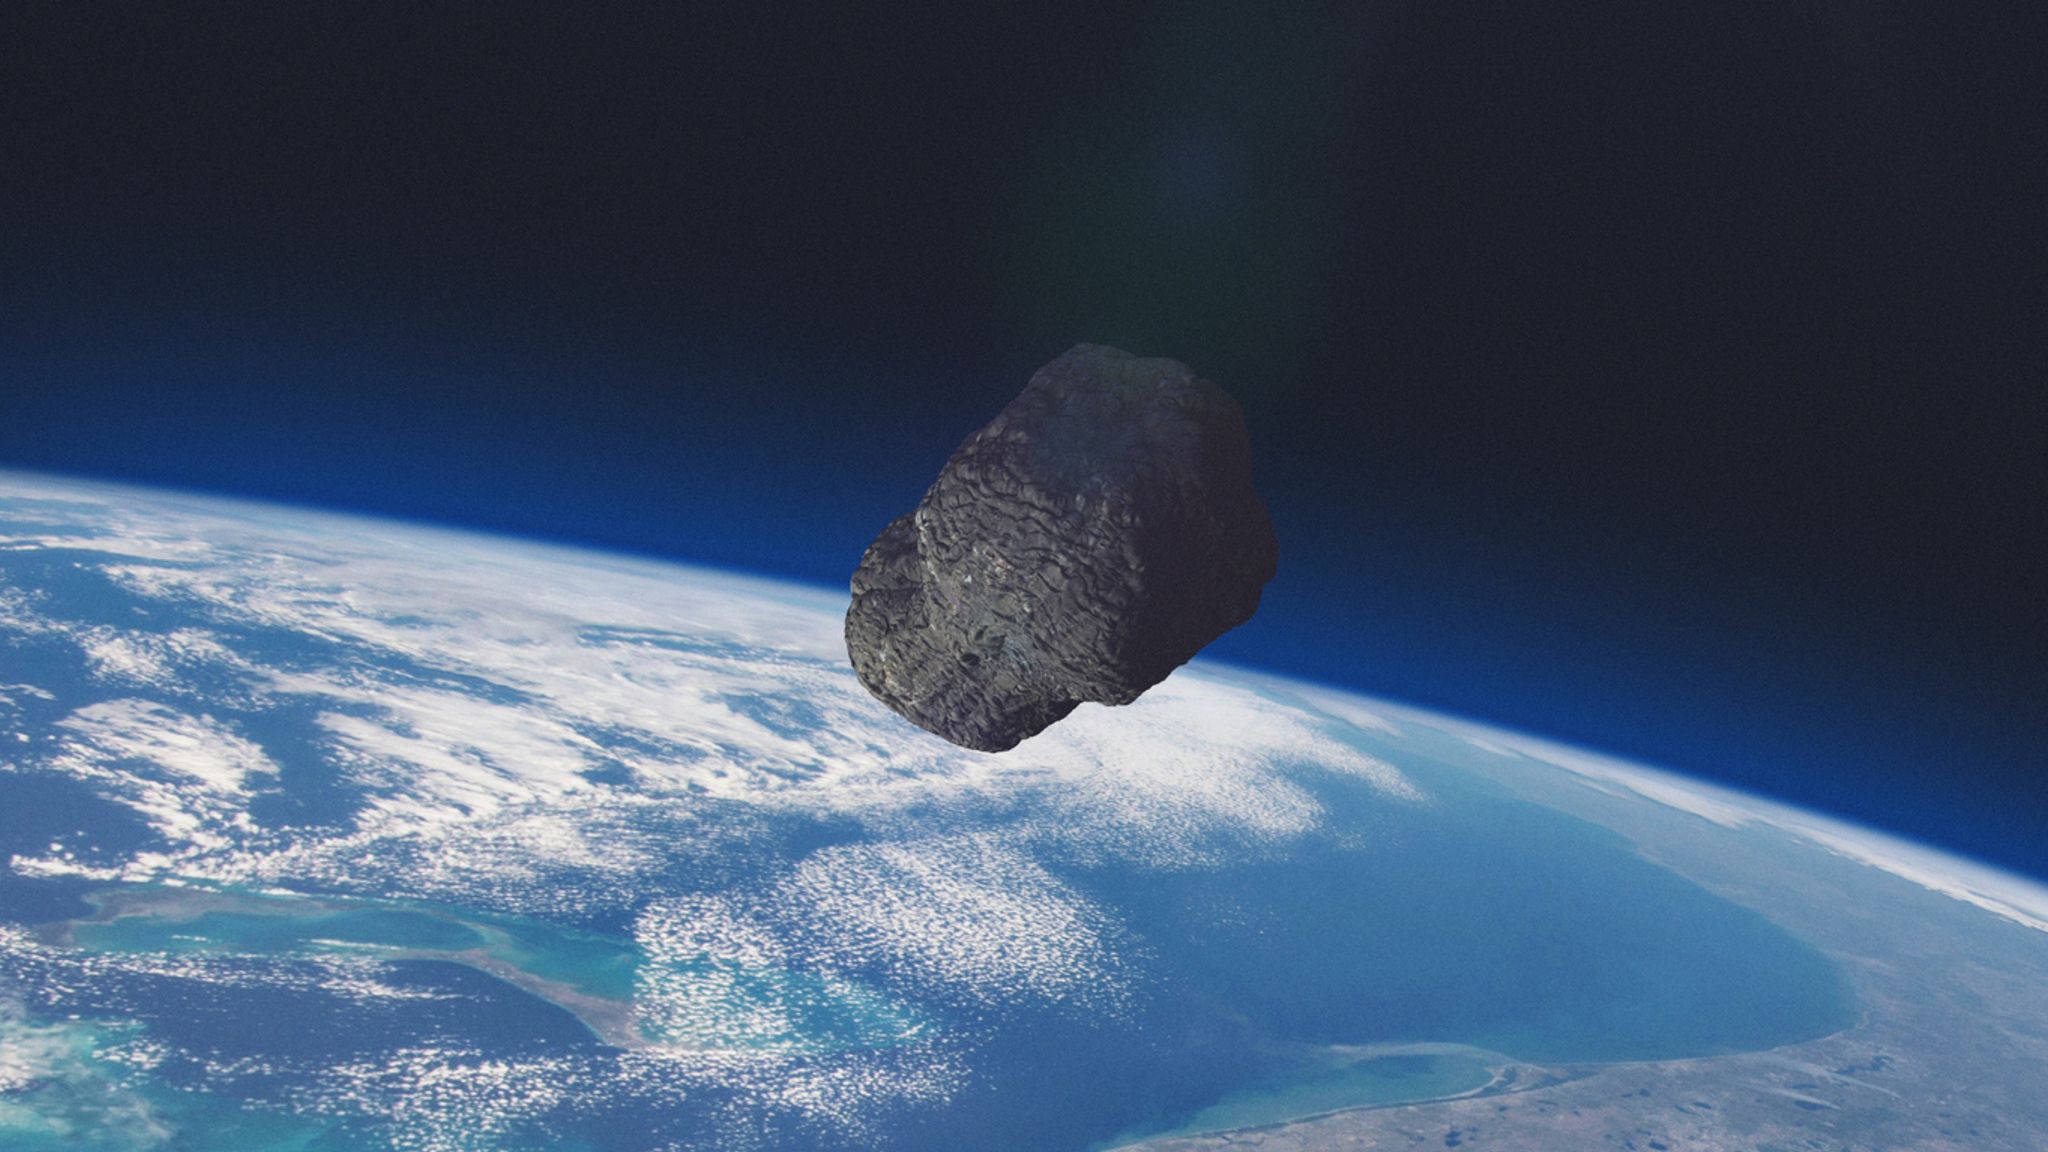 apophis 2029 asteroid impact map